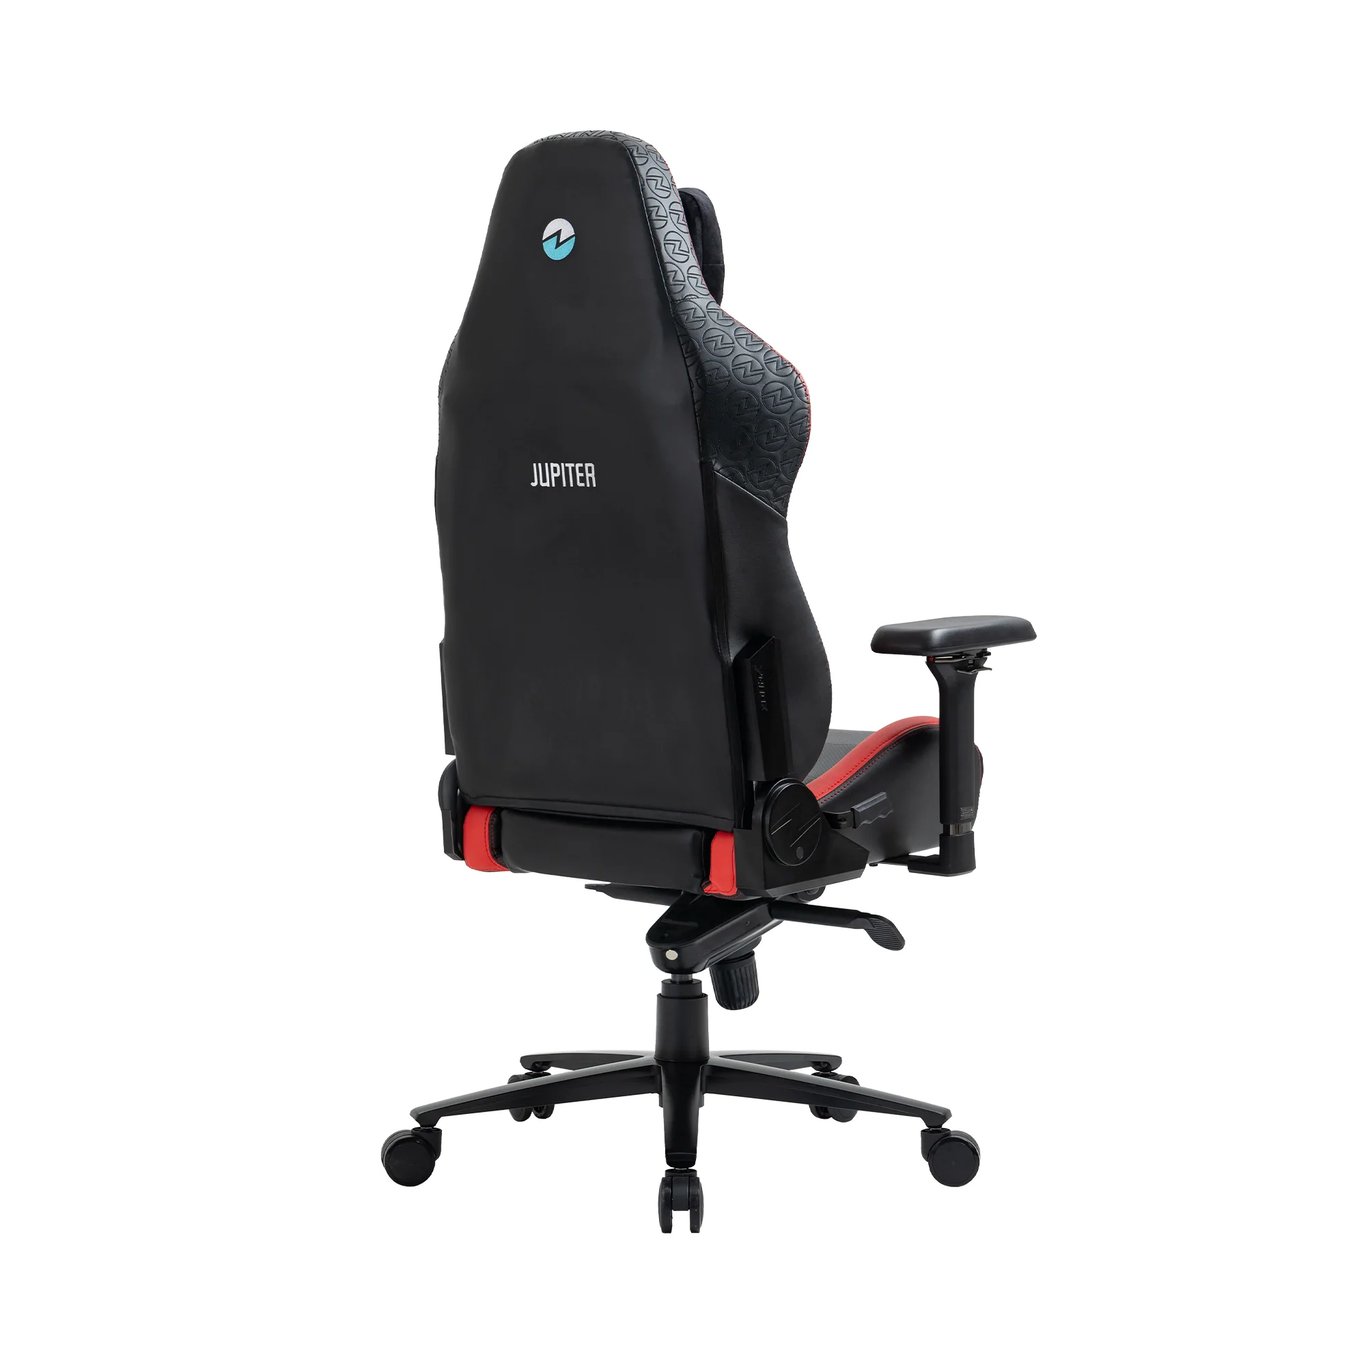 Zenox Jupiter-MK2 Racing Chair  - Leather/Red /-6